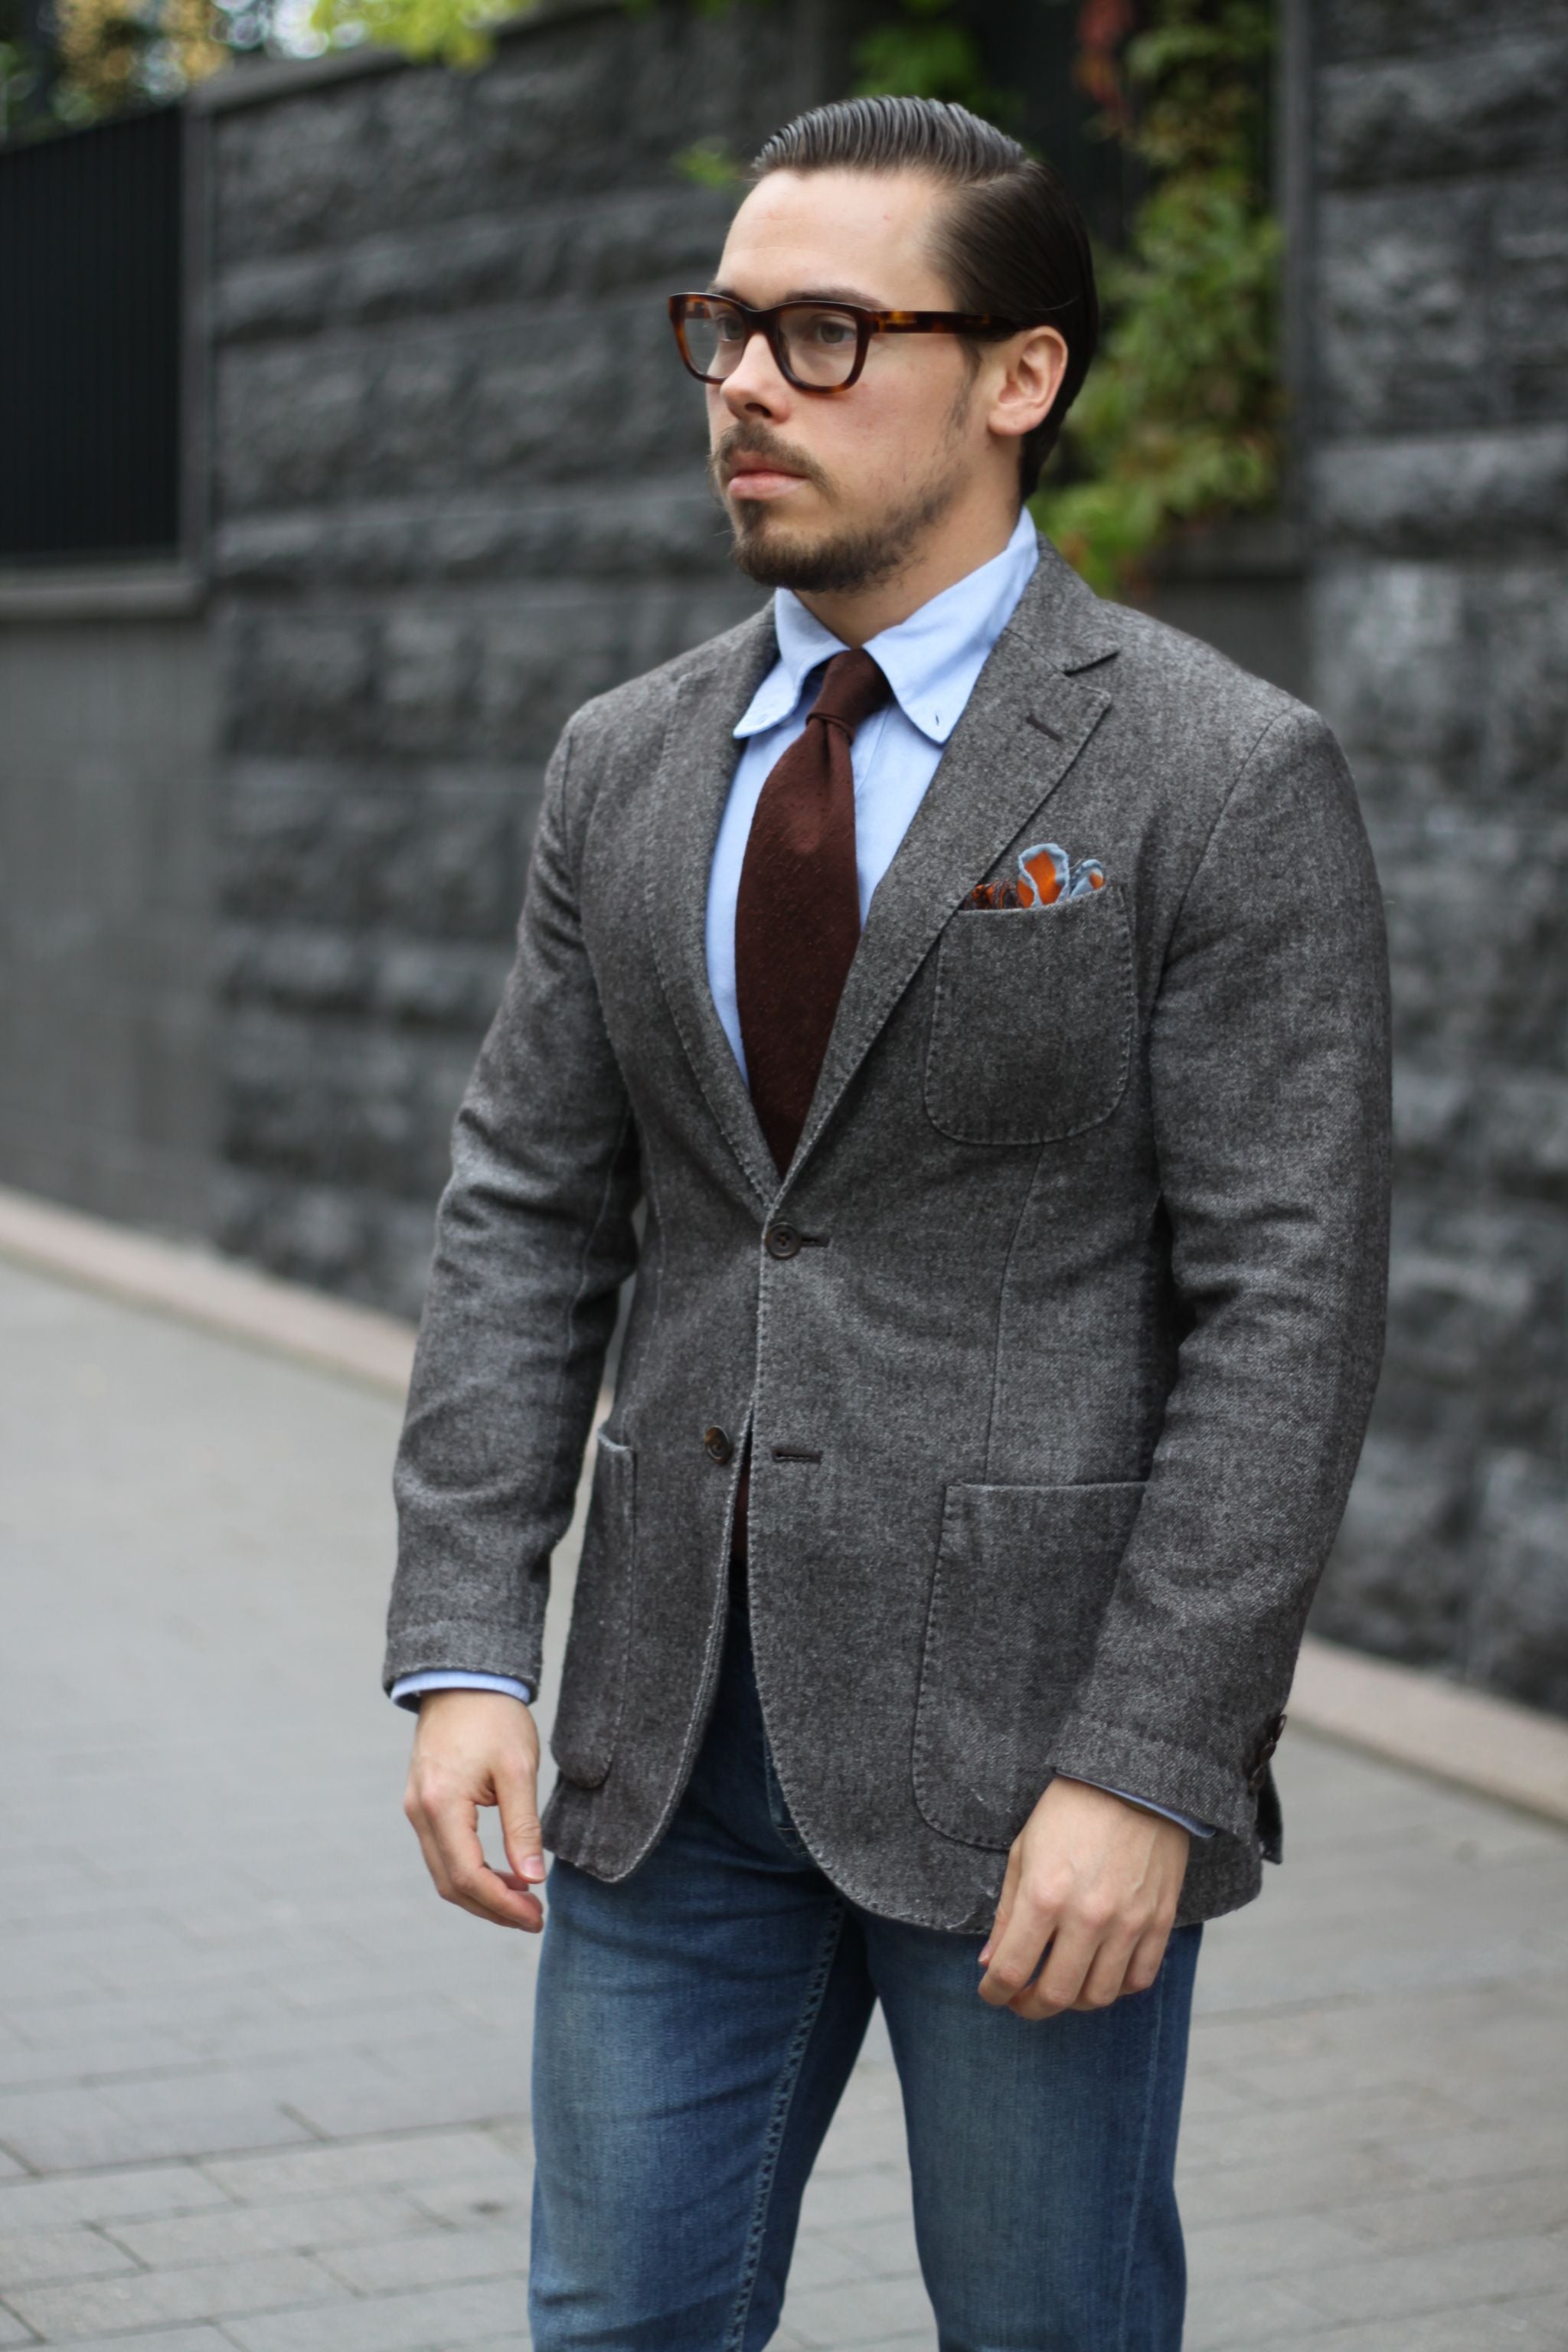 Tie with jeans - Brown shantung silk with denim - DressLikeA.com ...